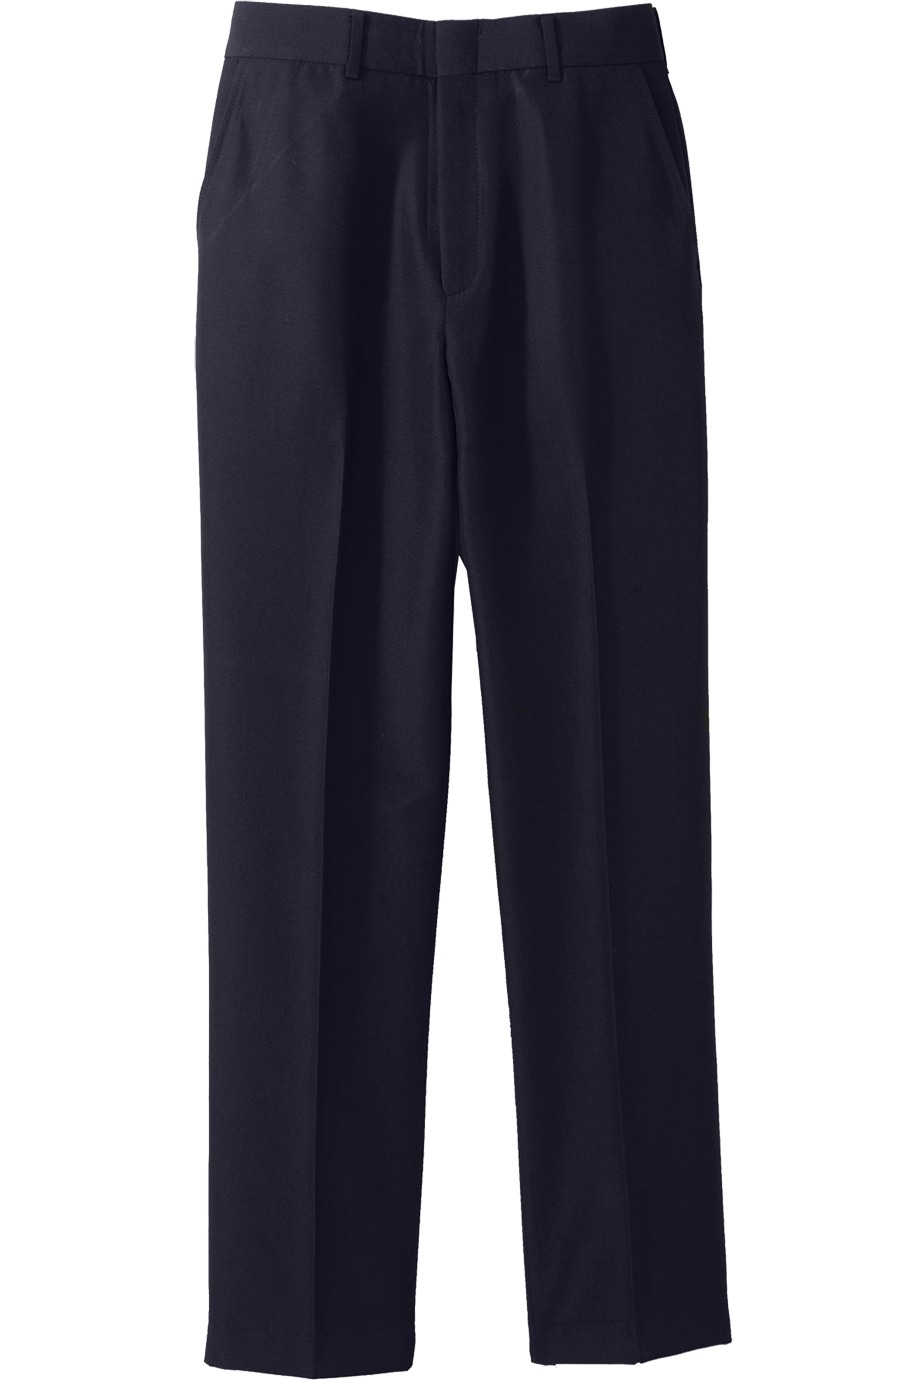 Edwards Garment 2720 - Men's Washable Wool Blend Flat Front Pant